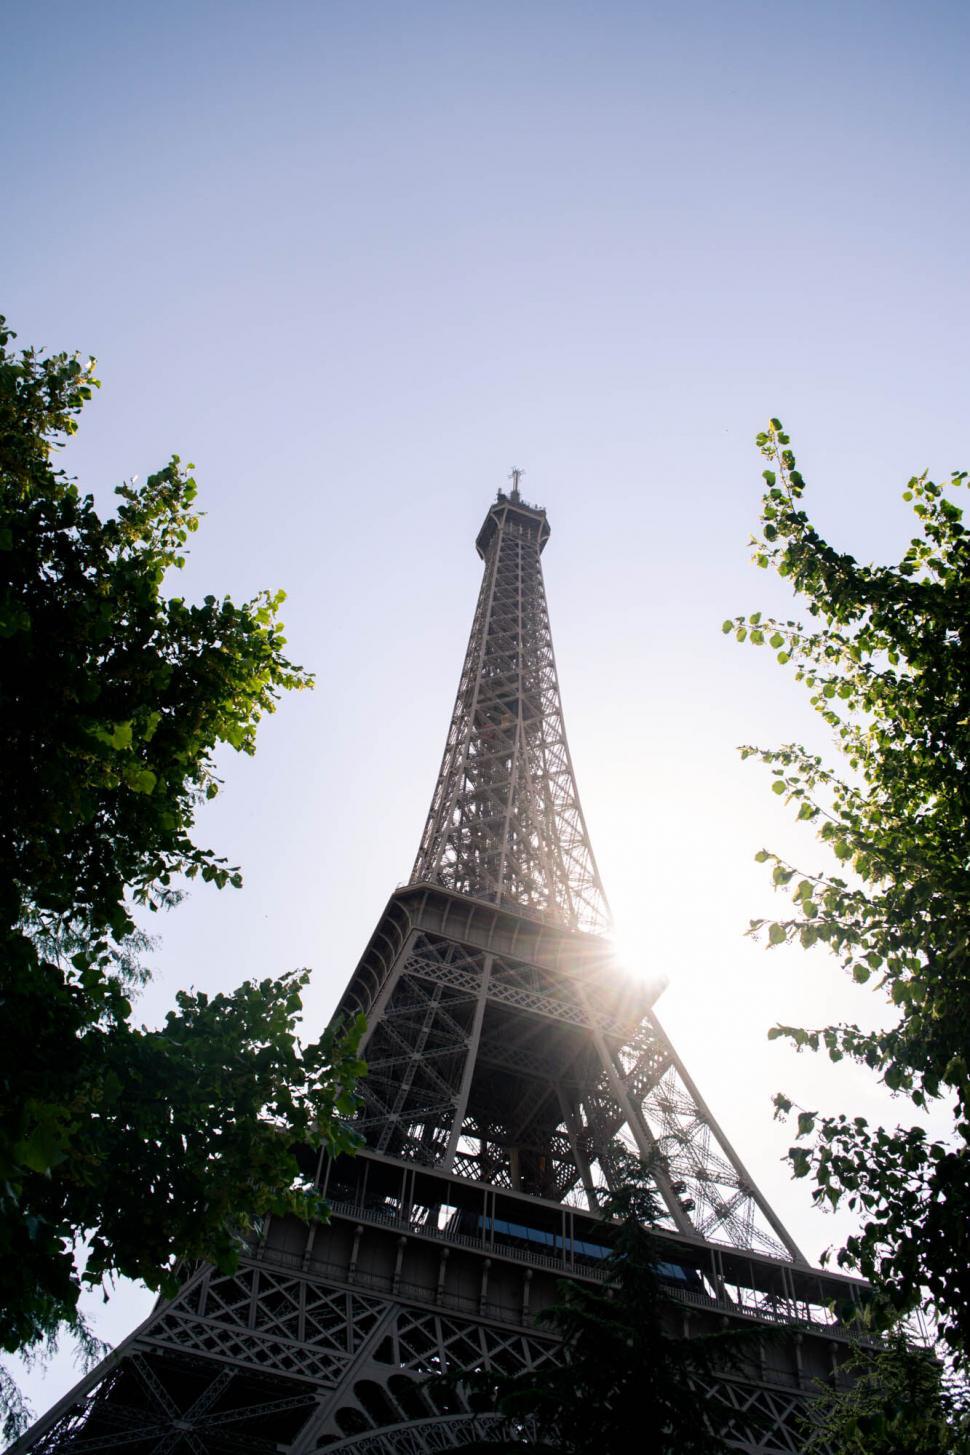 Free Image of Iconic Eiffel Tower among green foliage 